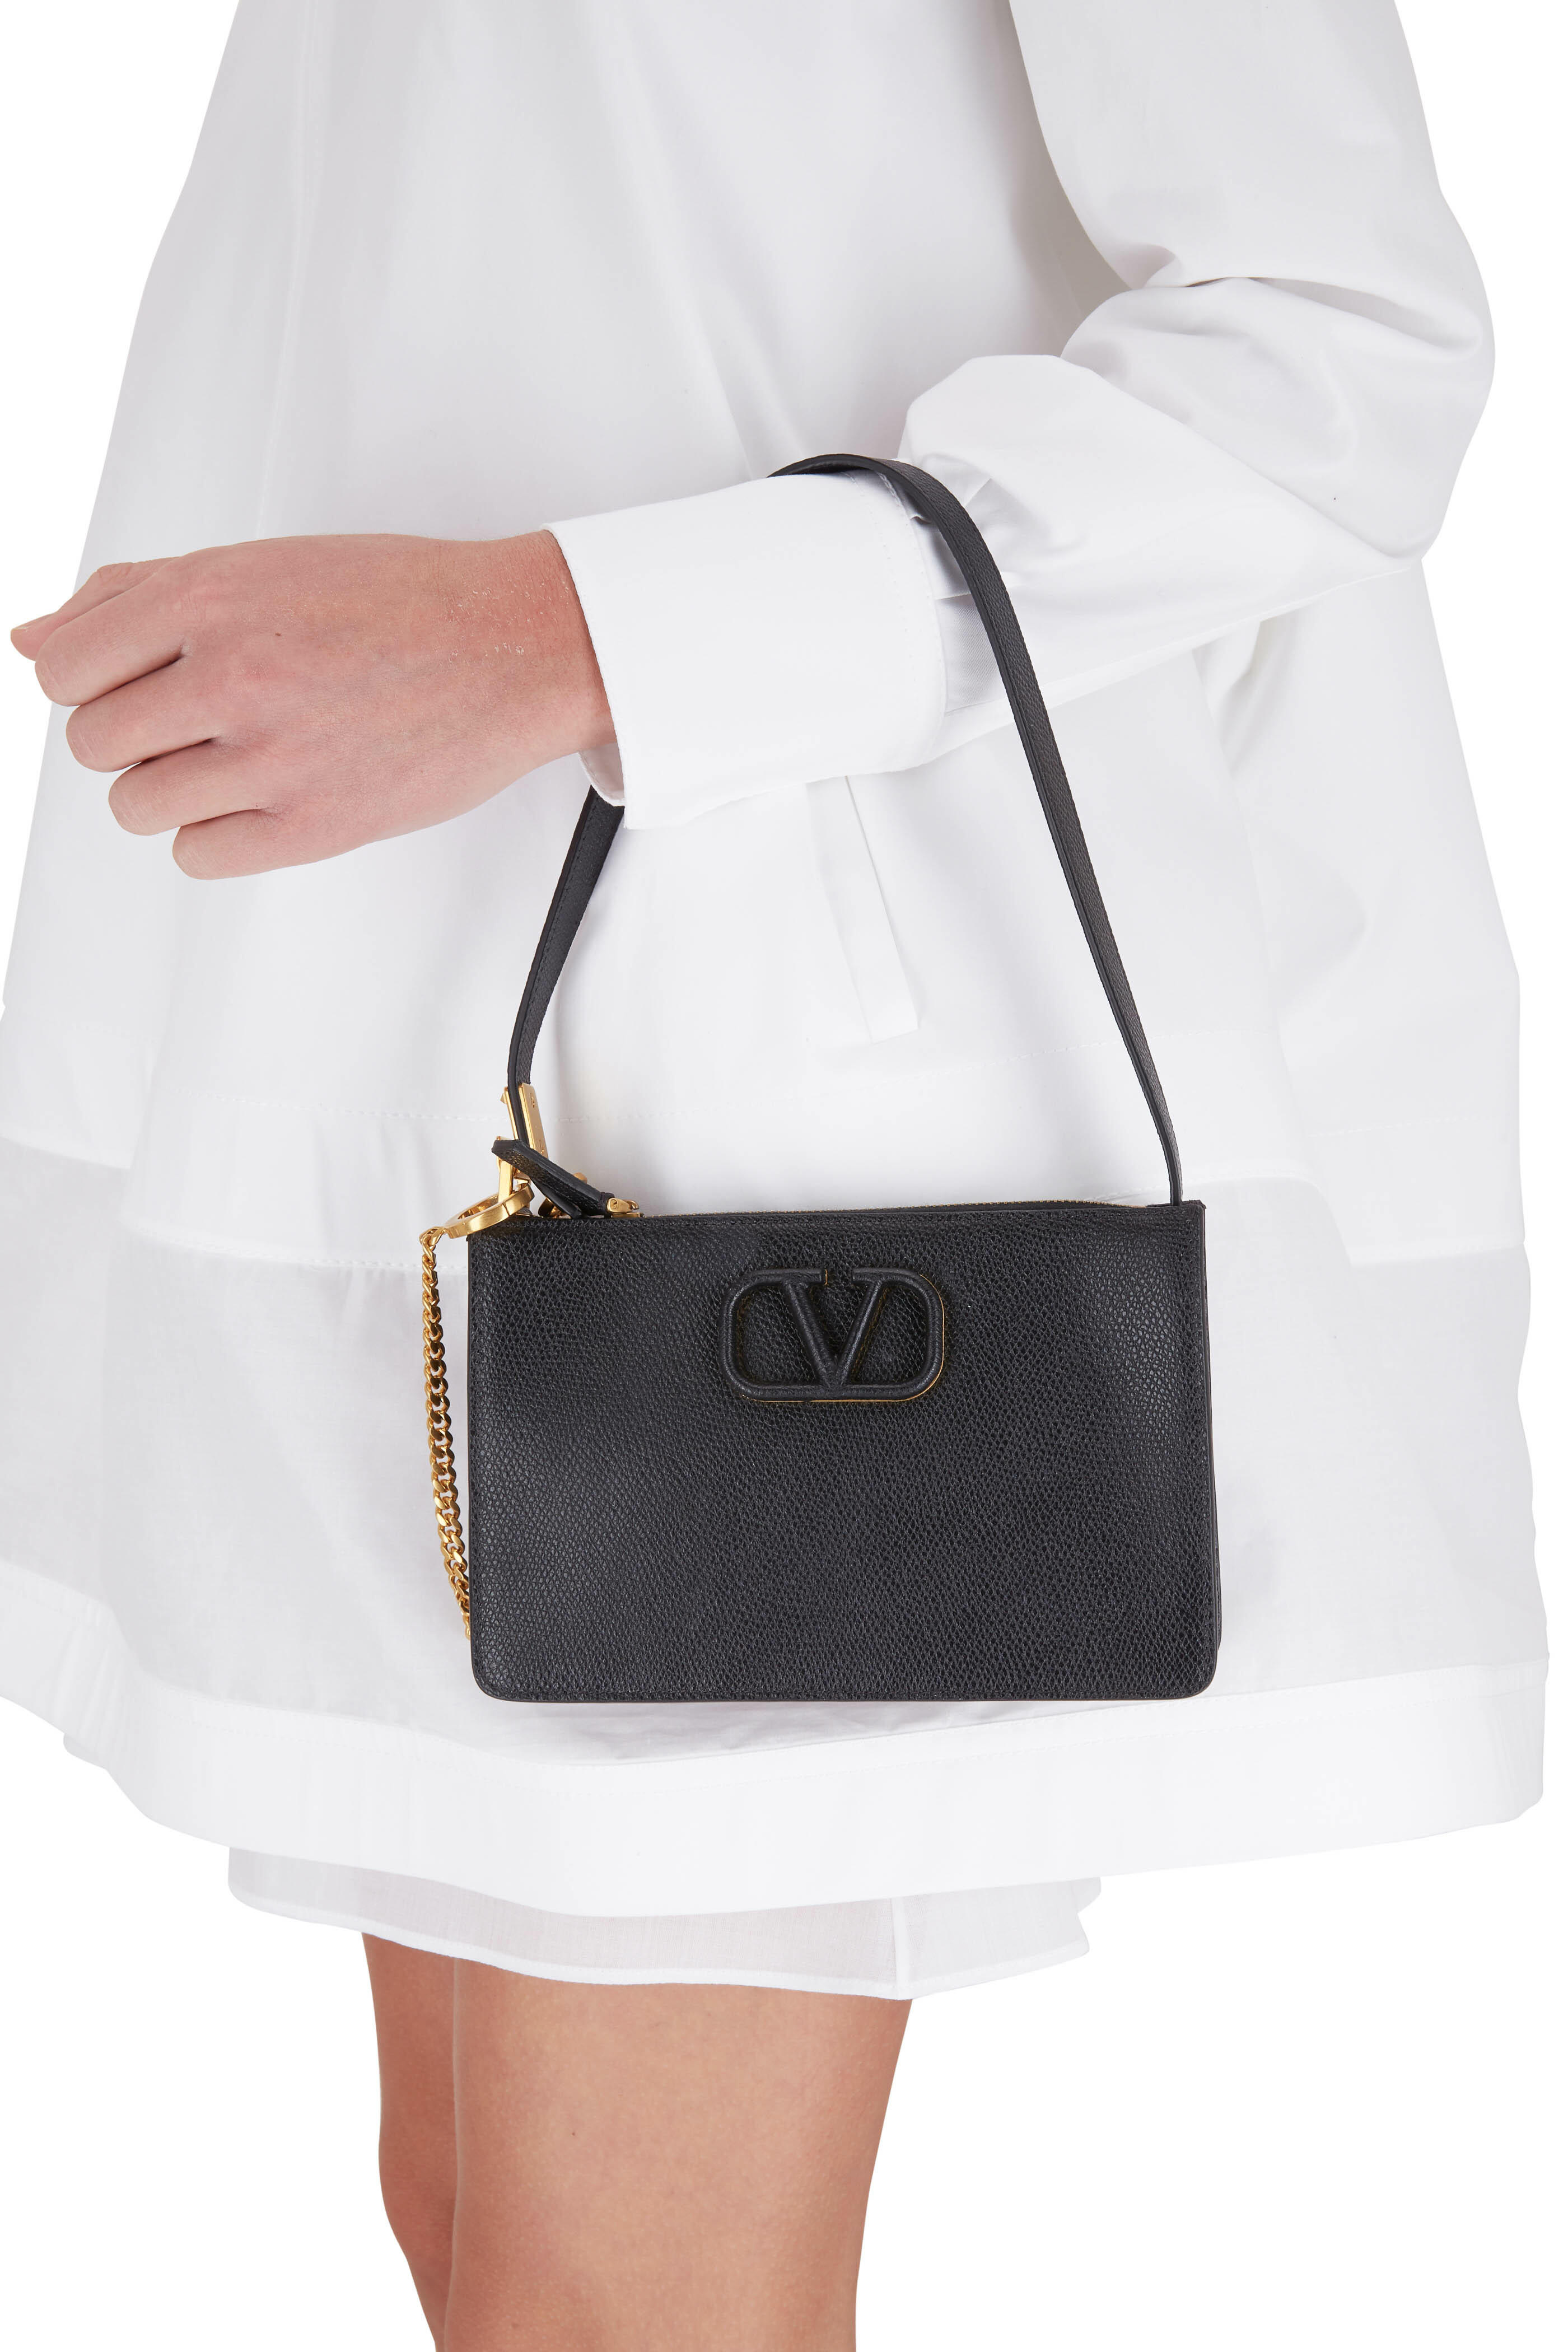 VALENTINO Garavani V Sling Leather Chain Shoulder Bag in Black